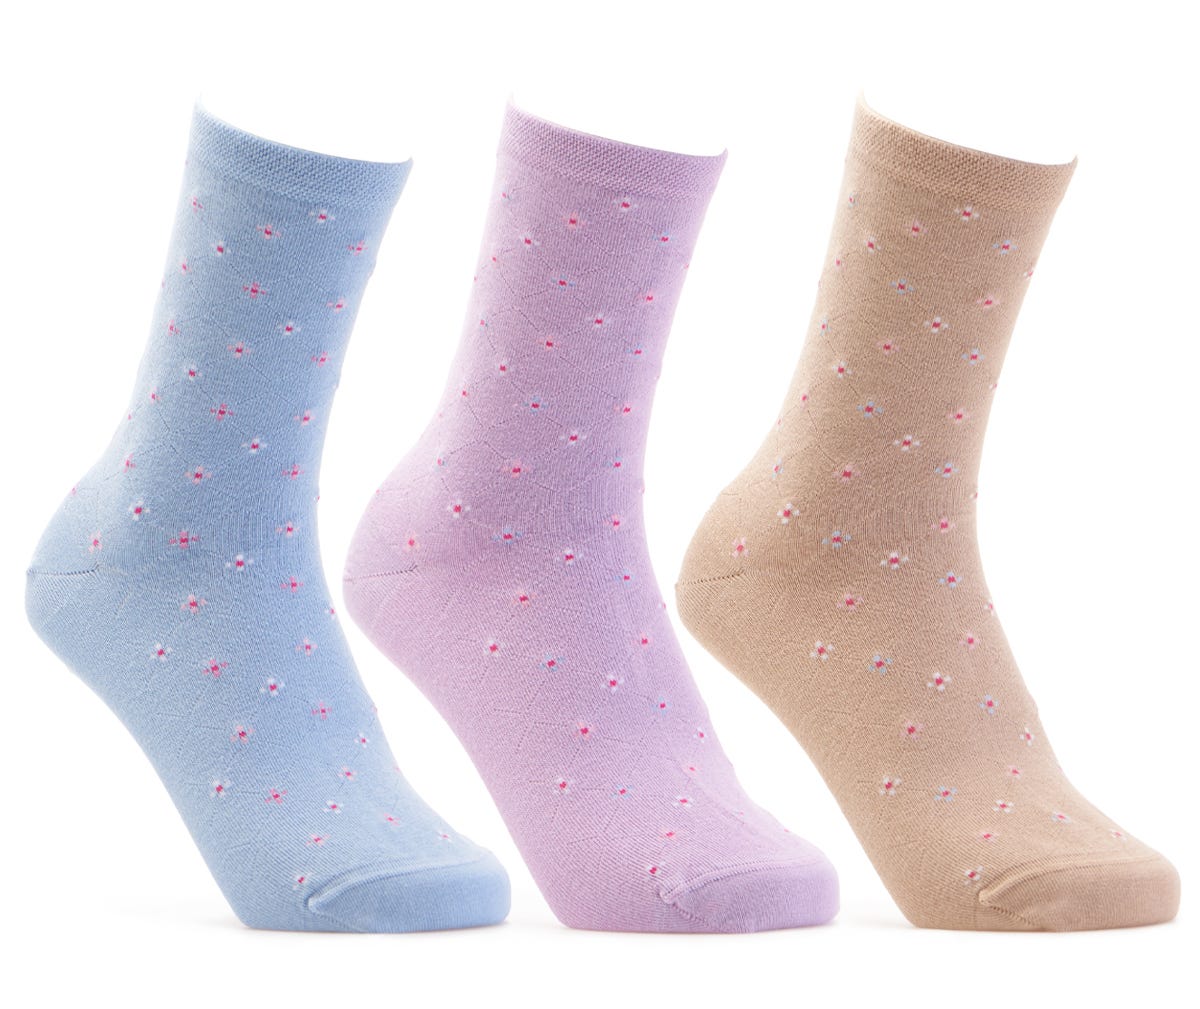 Cosyfeet NEW Women's Cotton-rich Seam-free Patterned Socks